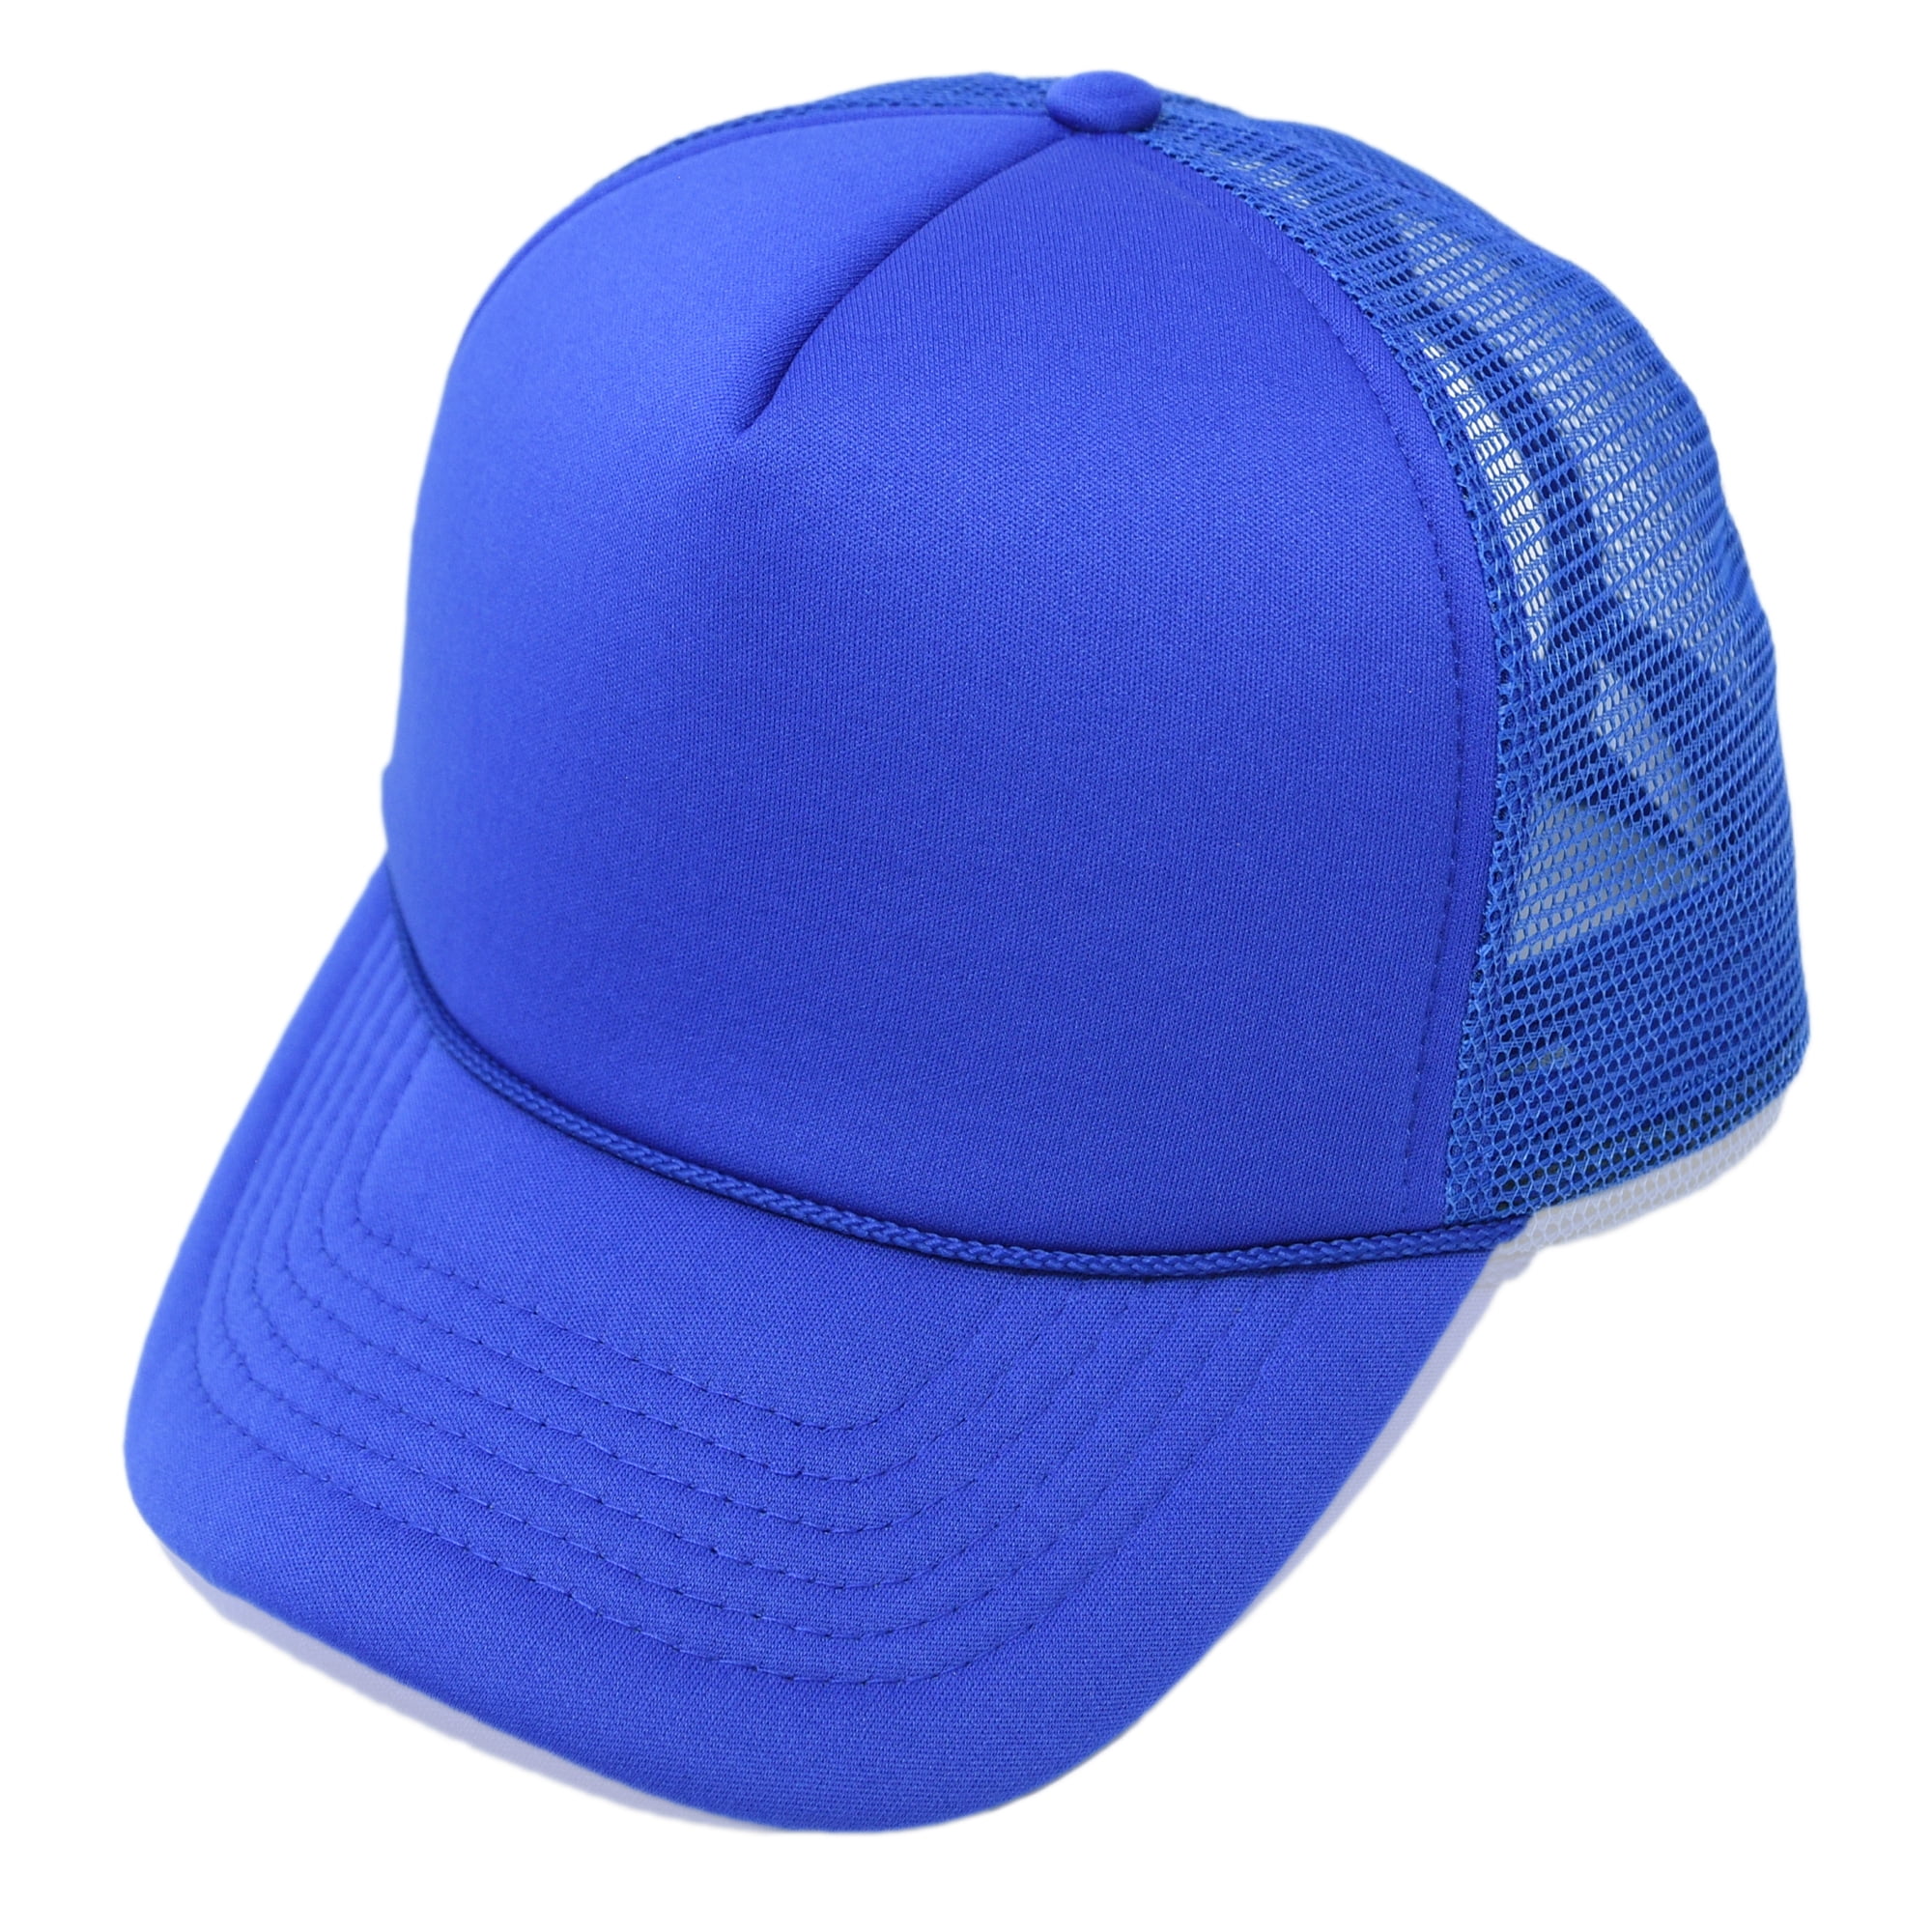 Vintage Navy Full Speed Ahead Trucker Hat Large Blue Mesh Snapback Baseball Cap 